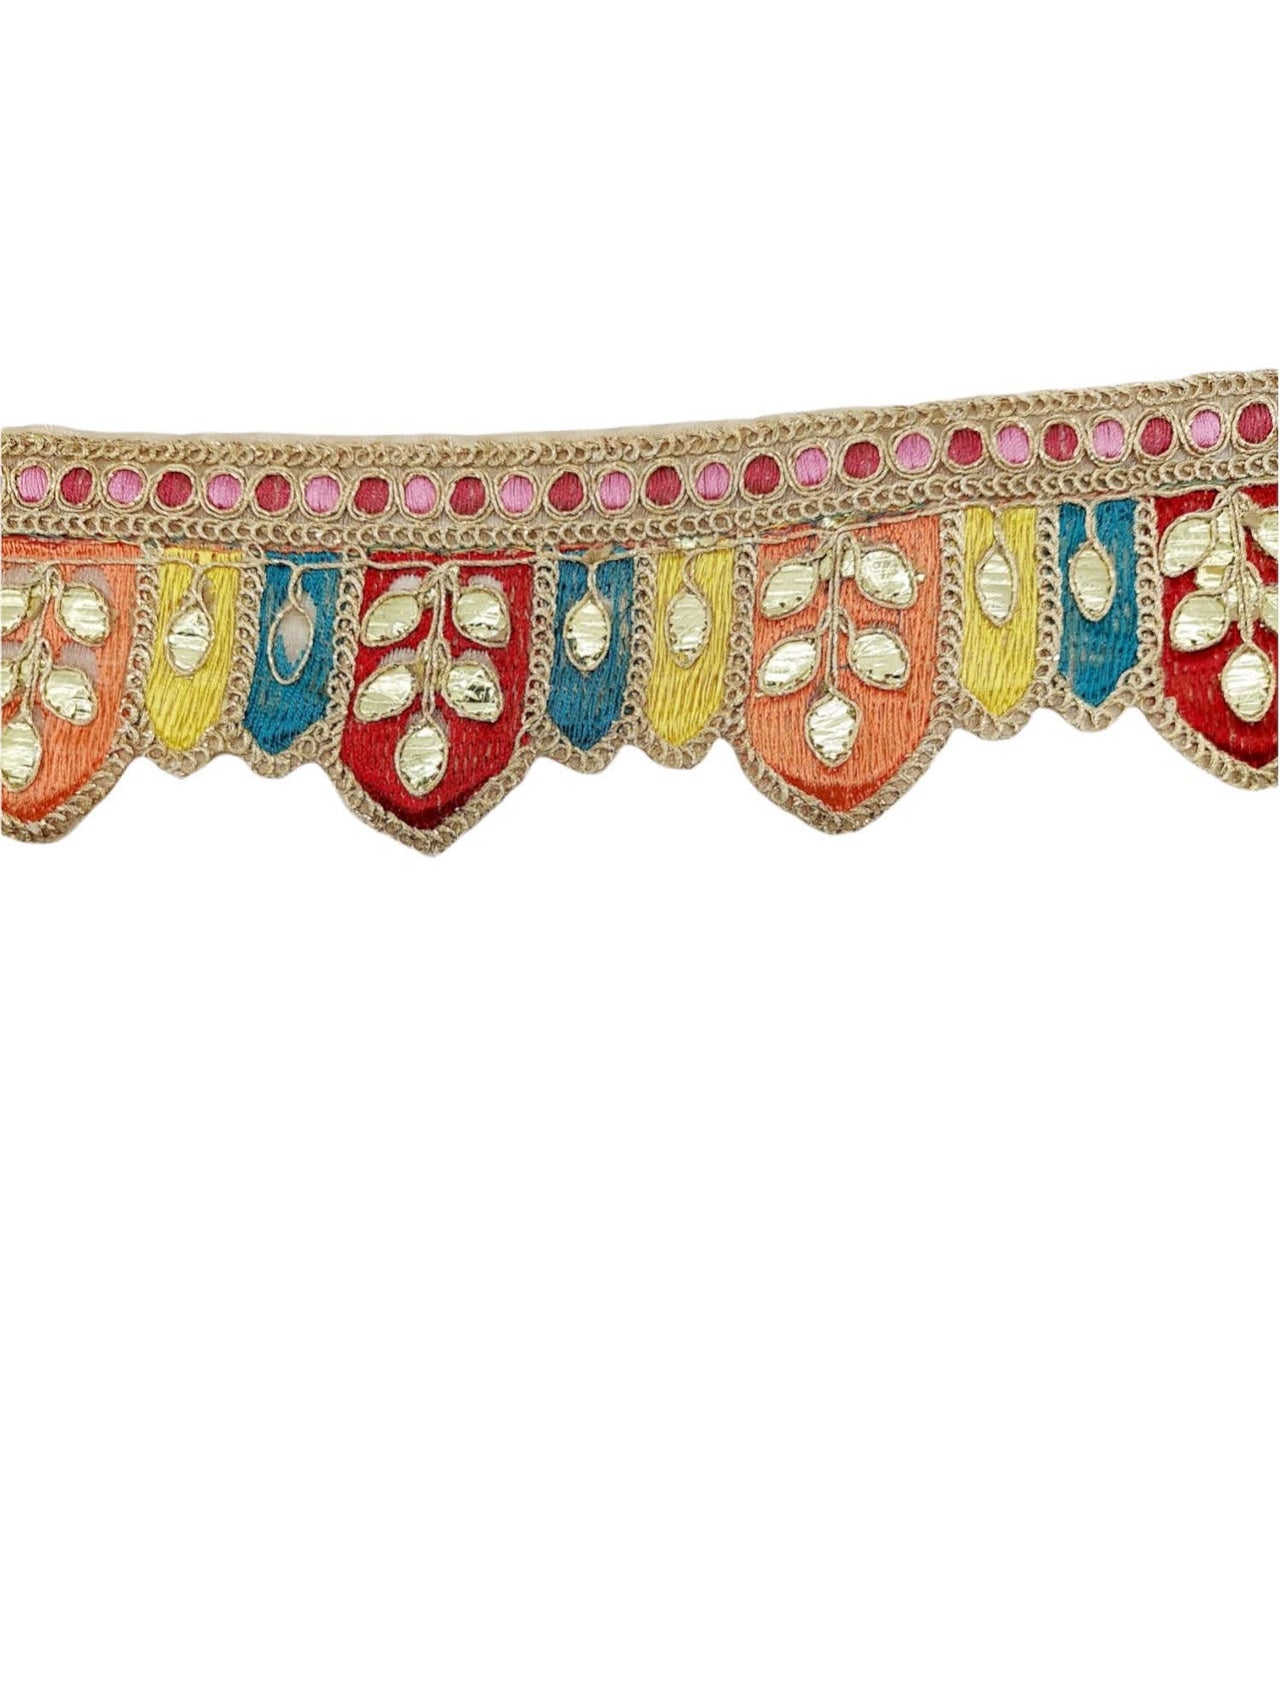 Sheer Gold Tissue Fabric Scalloped Lace Trim, Indian Gold Foil Work Embroidery Gota Patti Sari Border Decorative Trim Craft Lace, One Yard